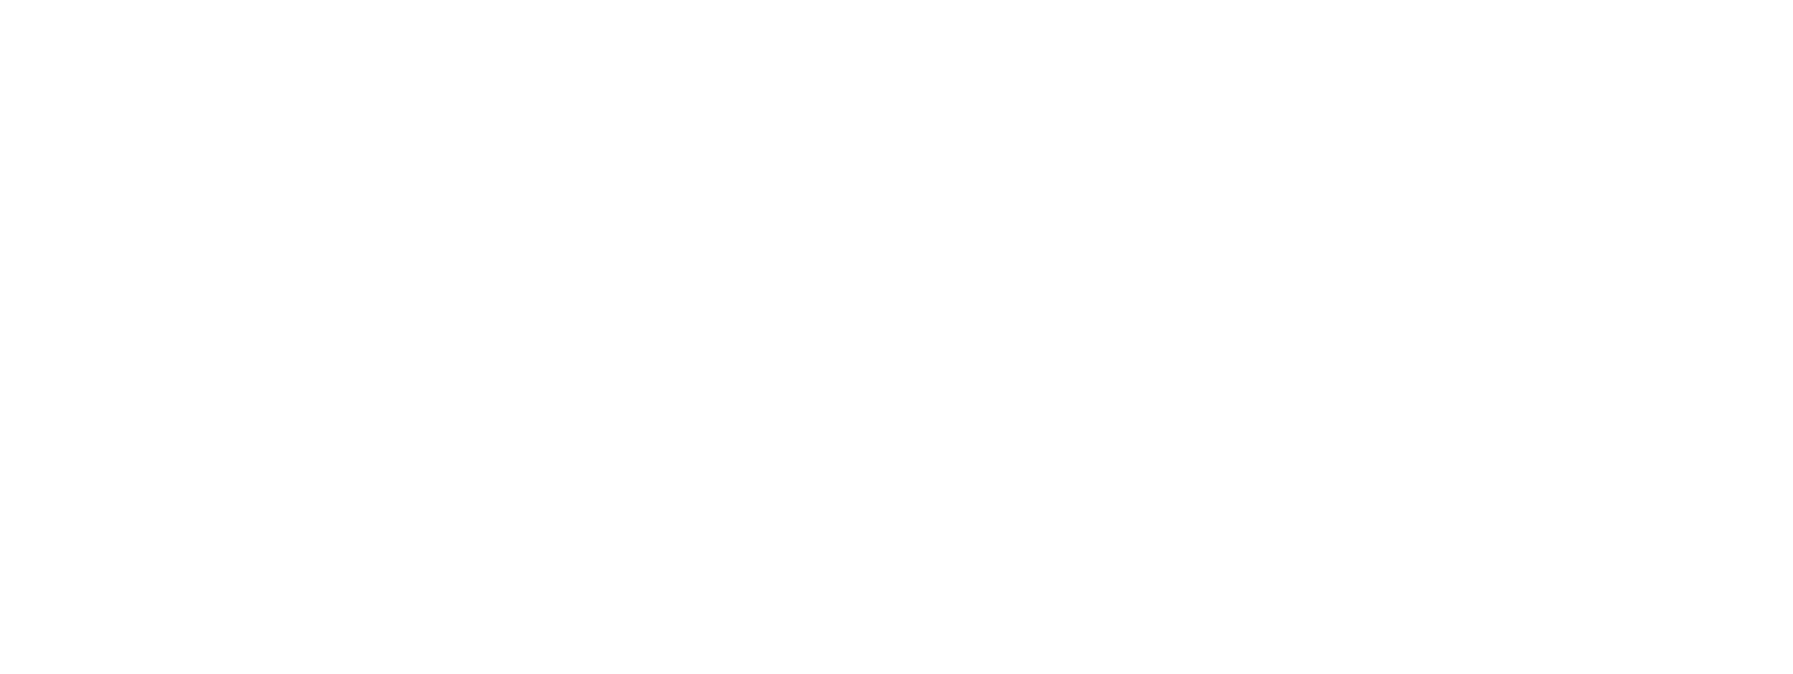 Atlantic Paint